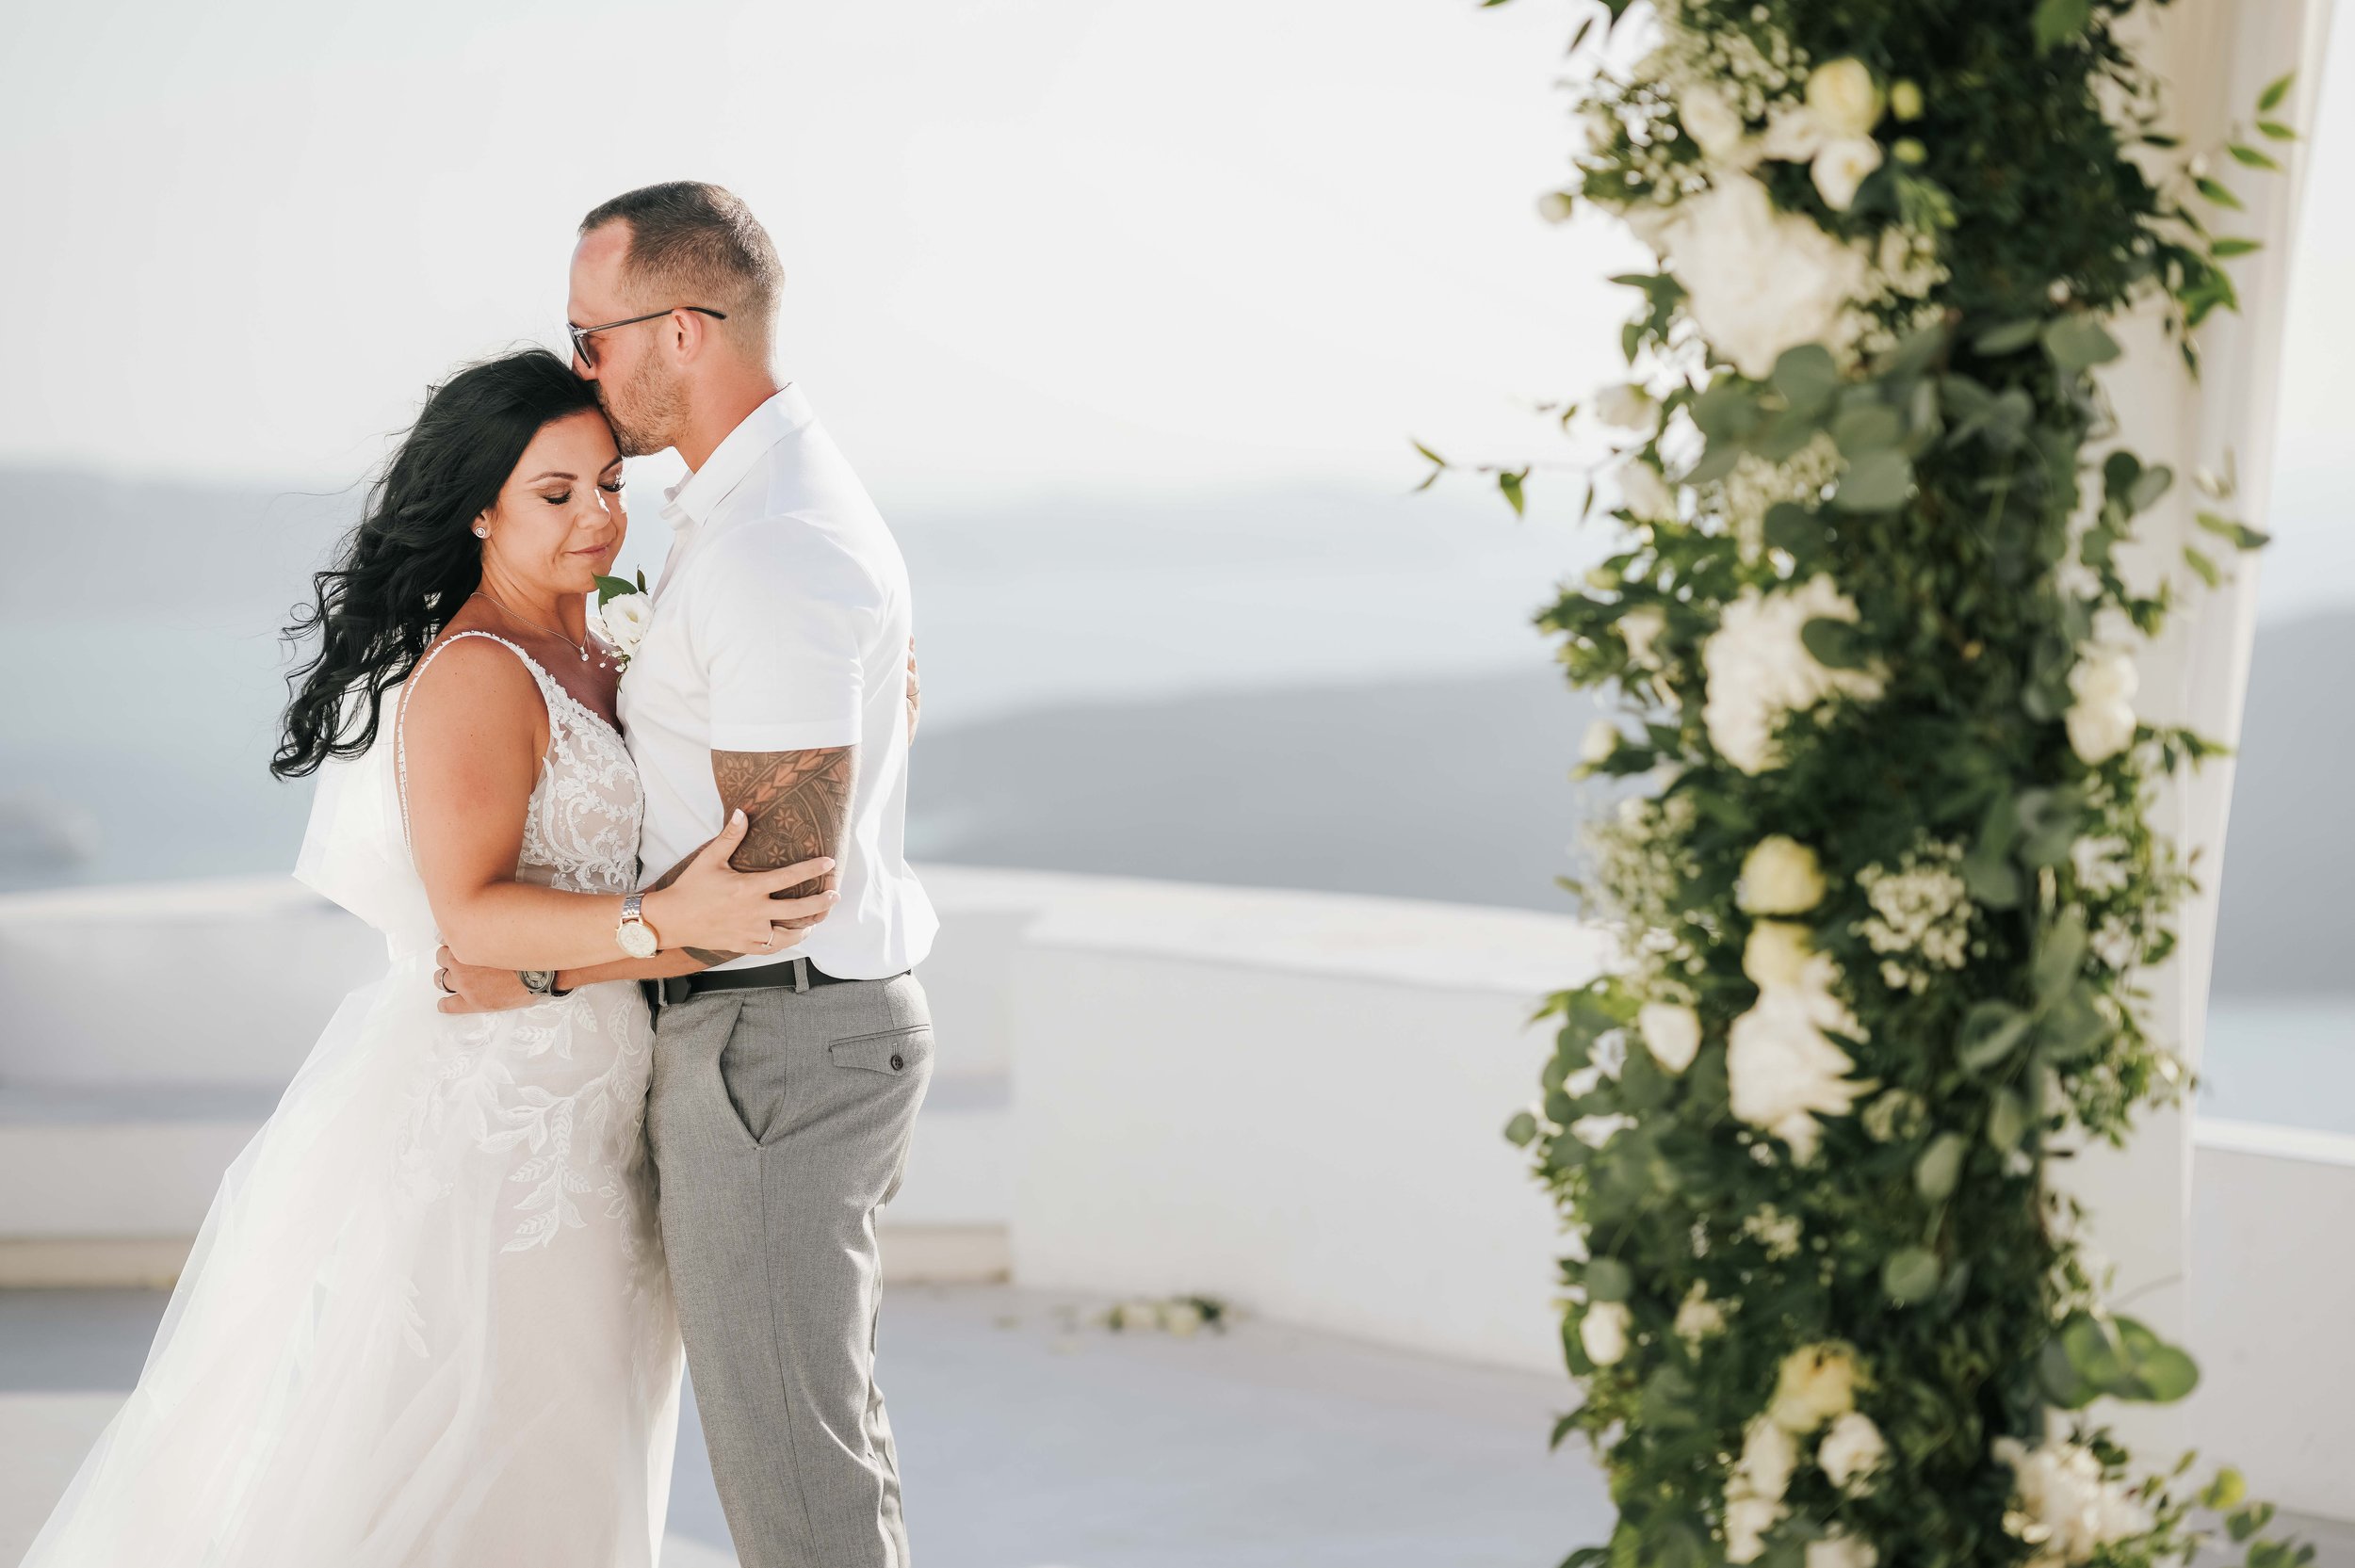 Santorini destination wedding Photography based in the UK - 030.jpg